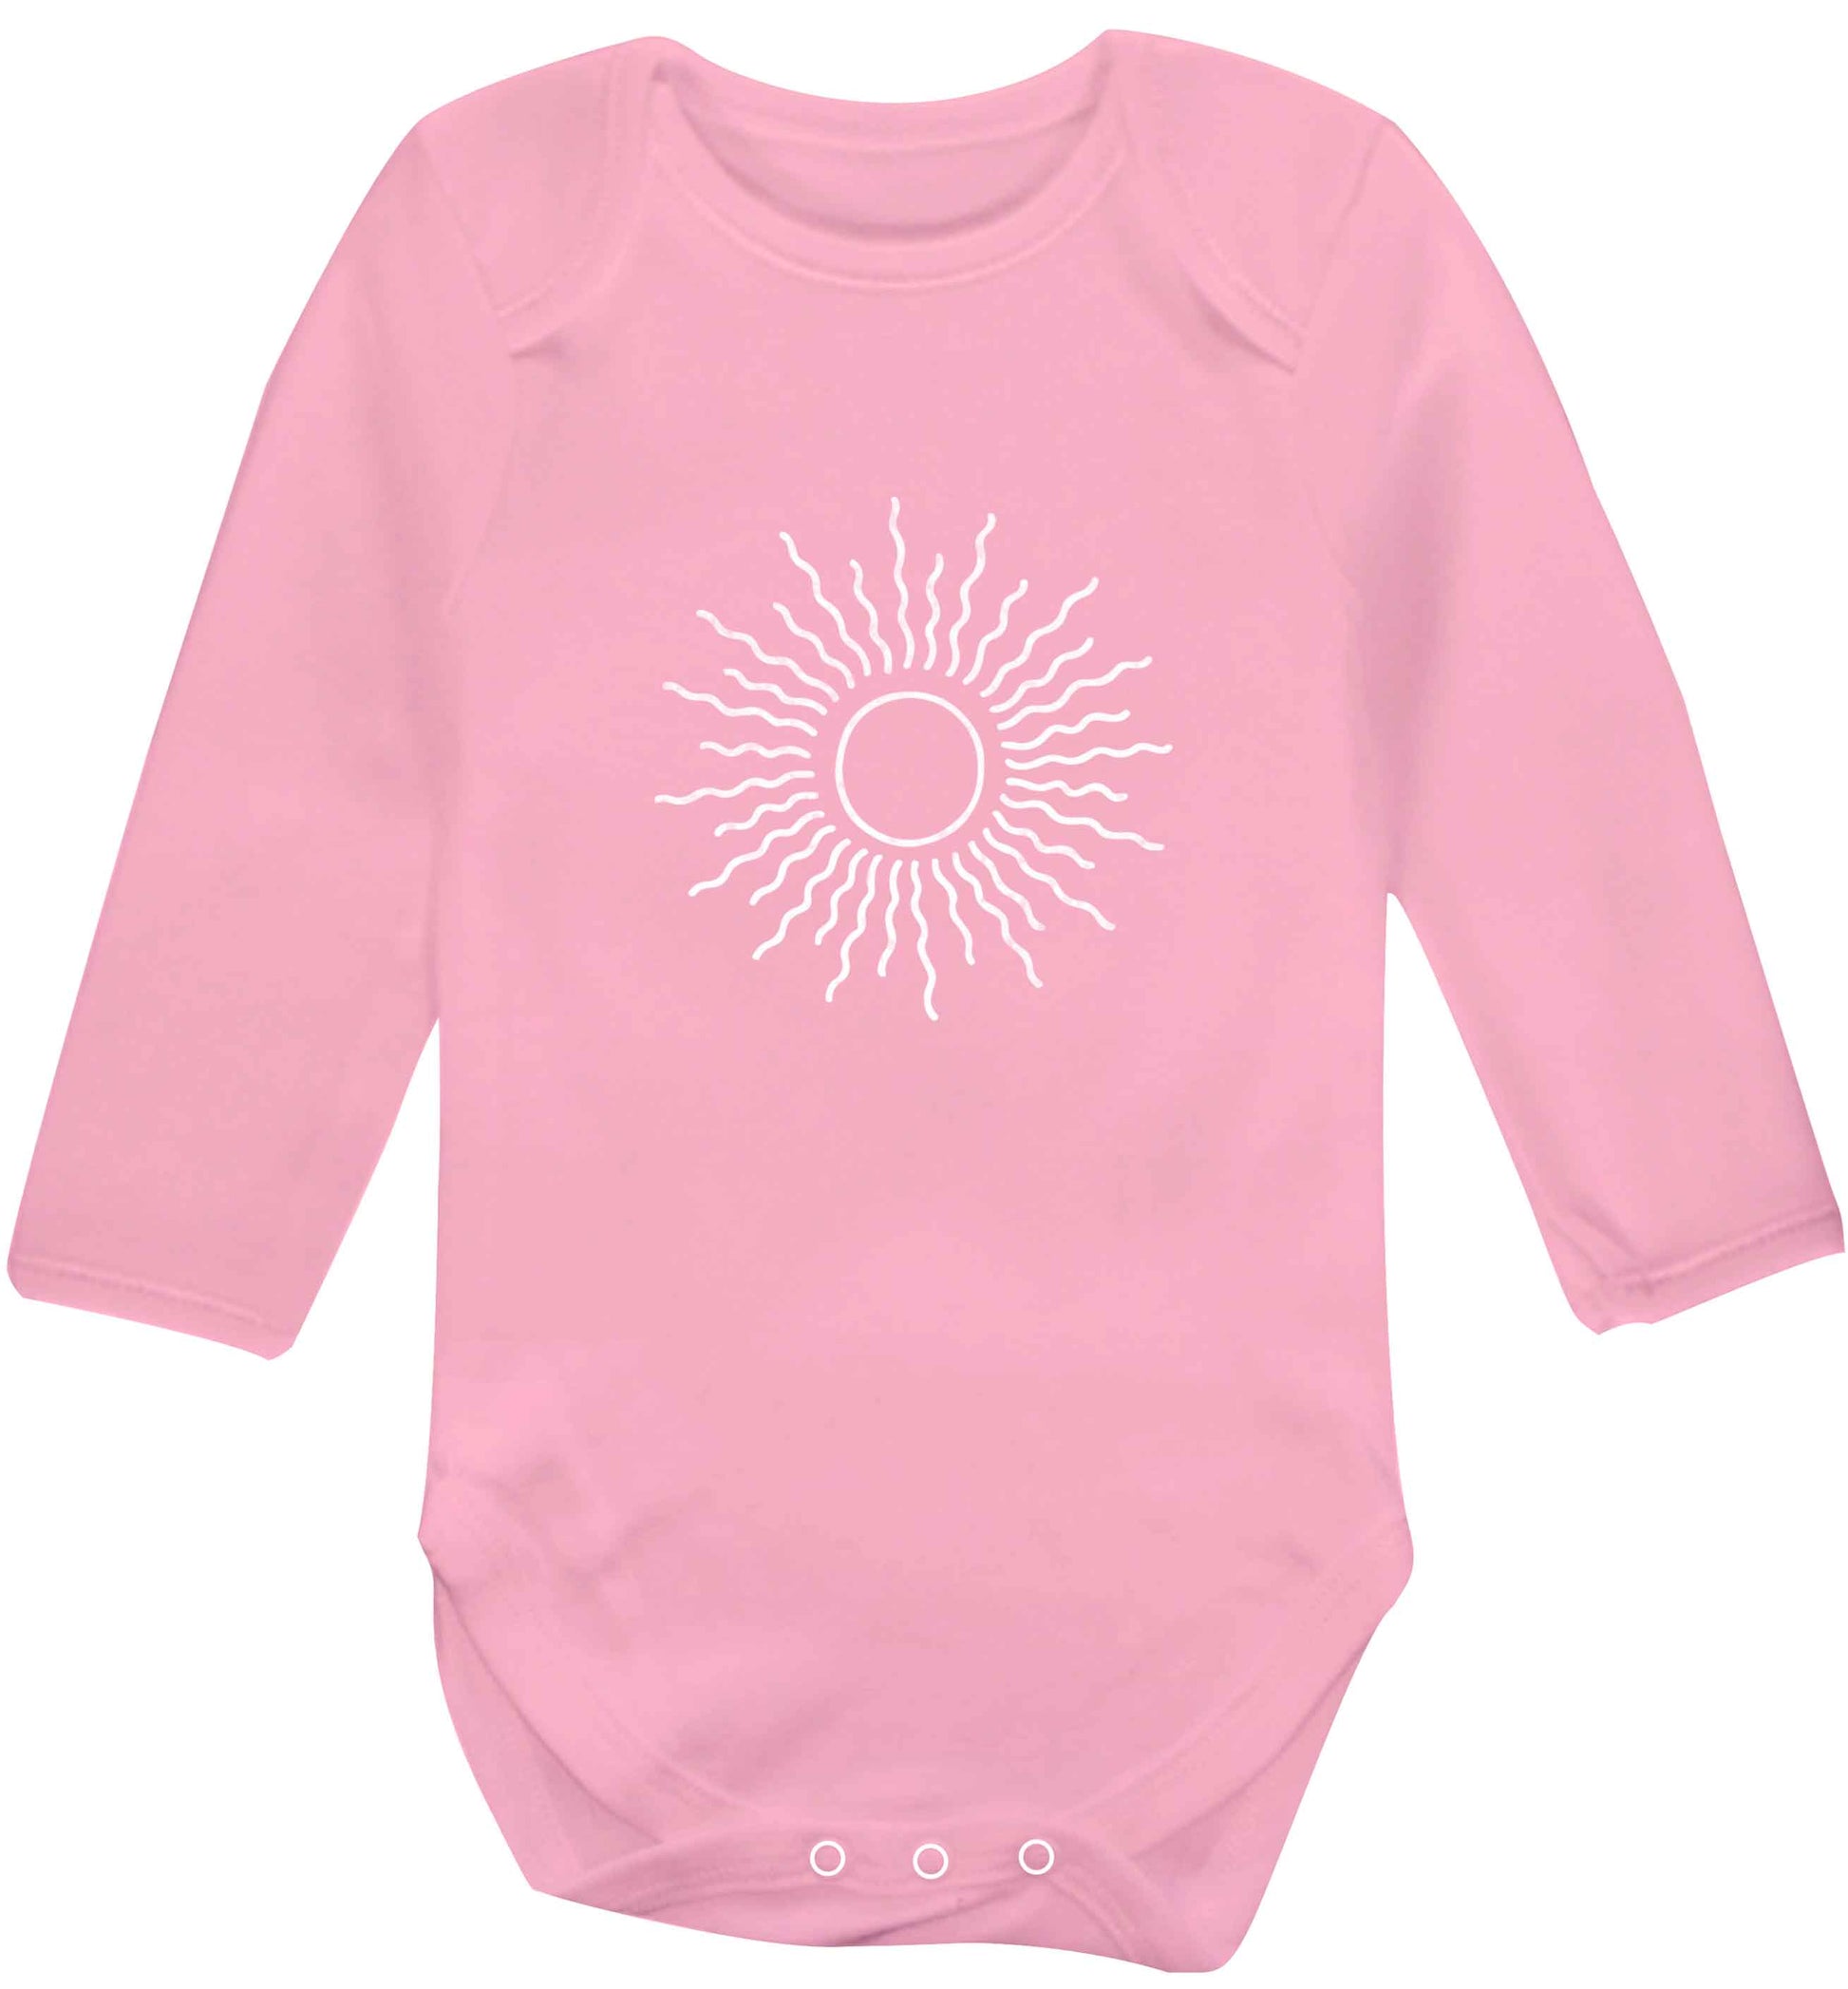 Sun illustration baby vest long sleeved pale pink 6-12 months